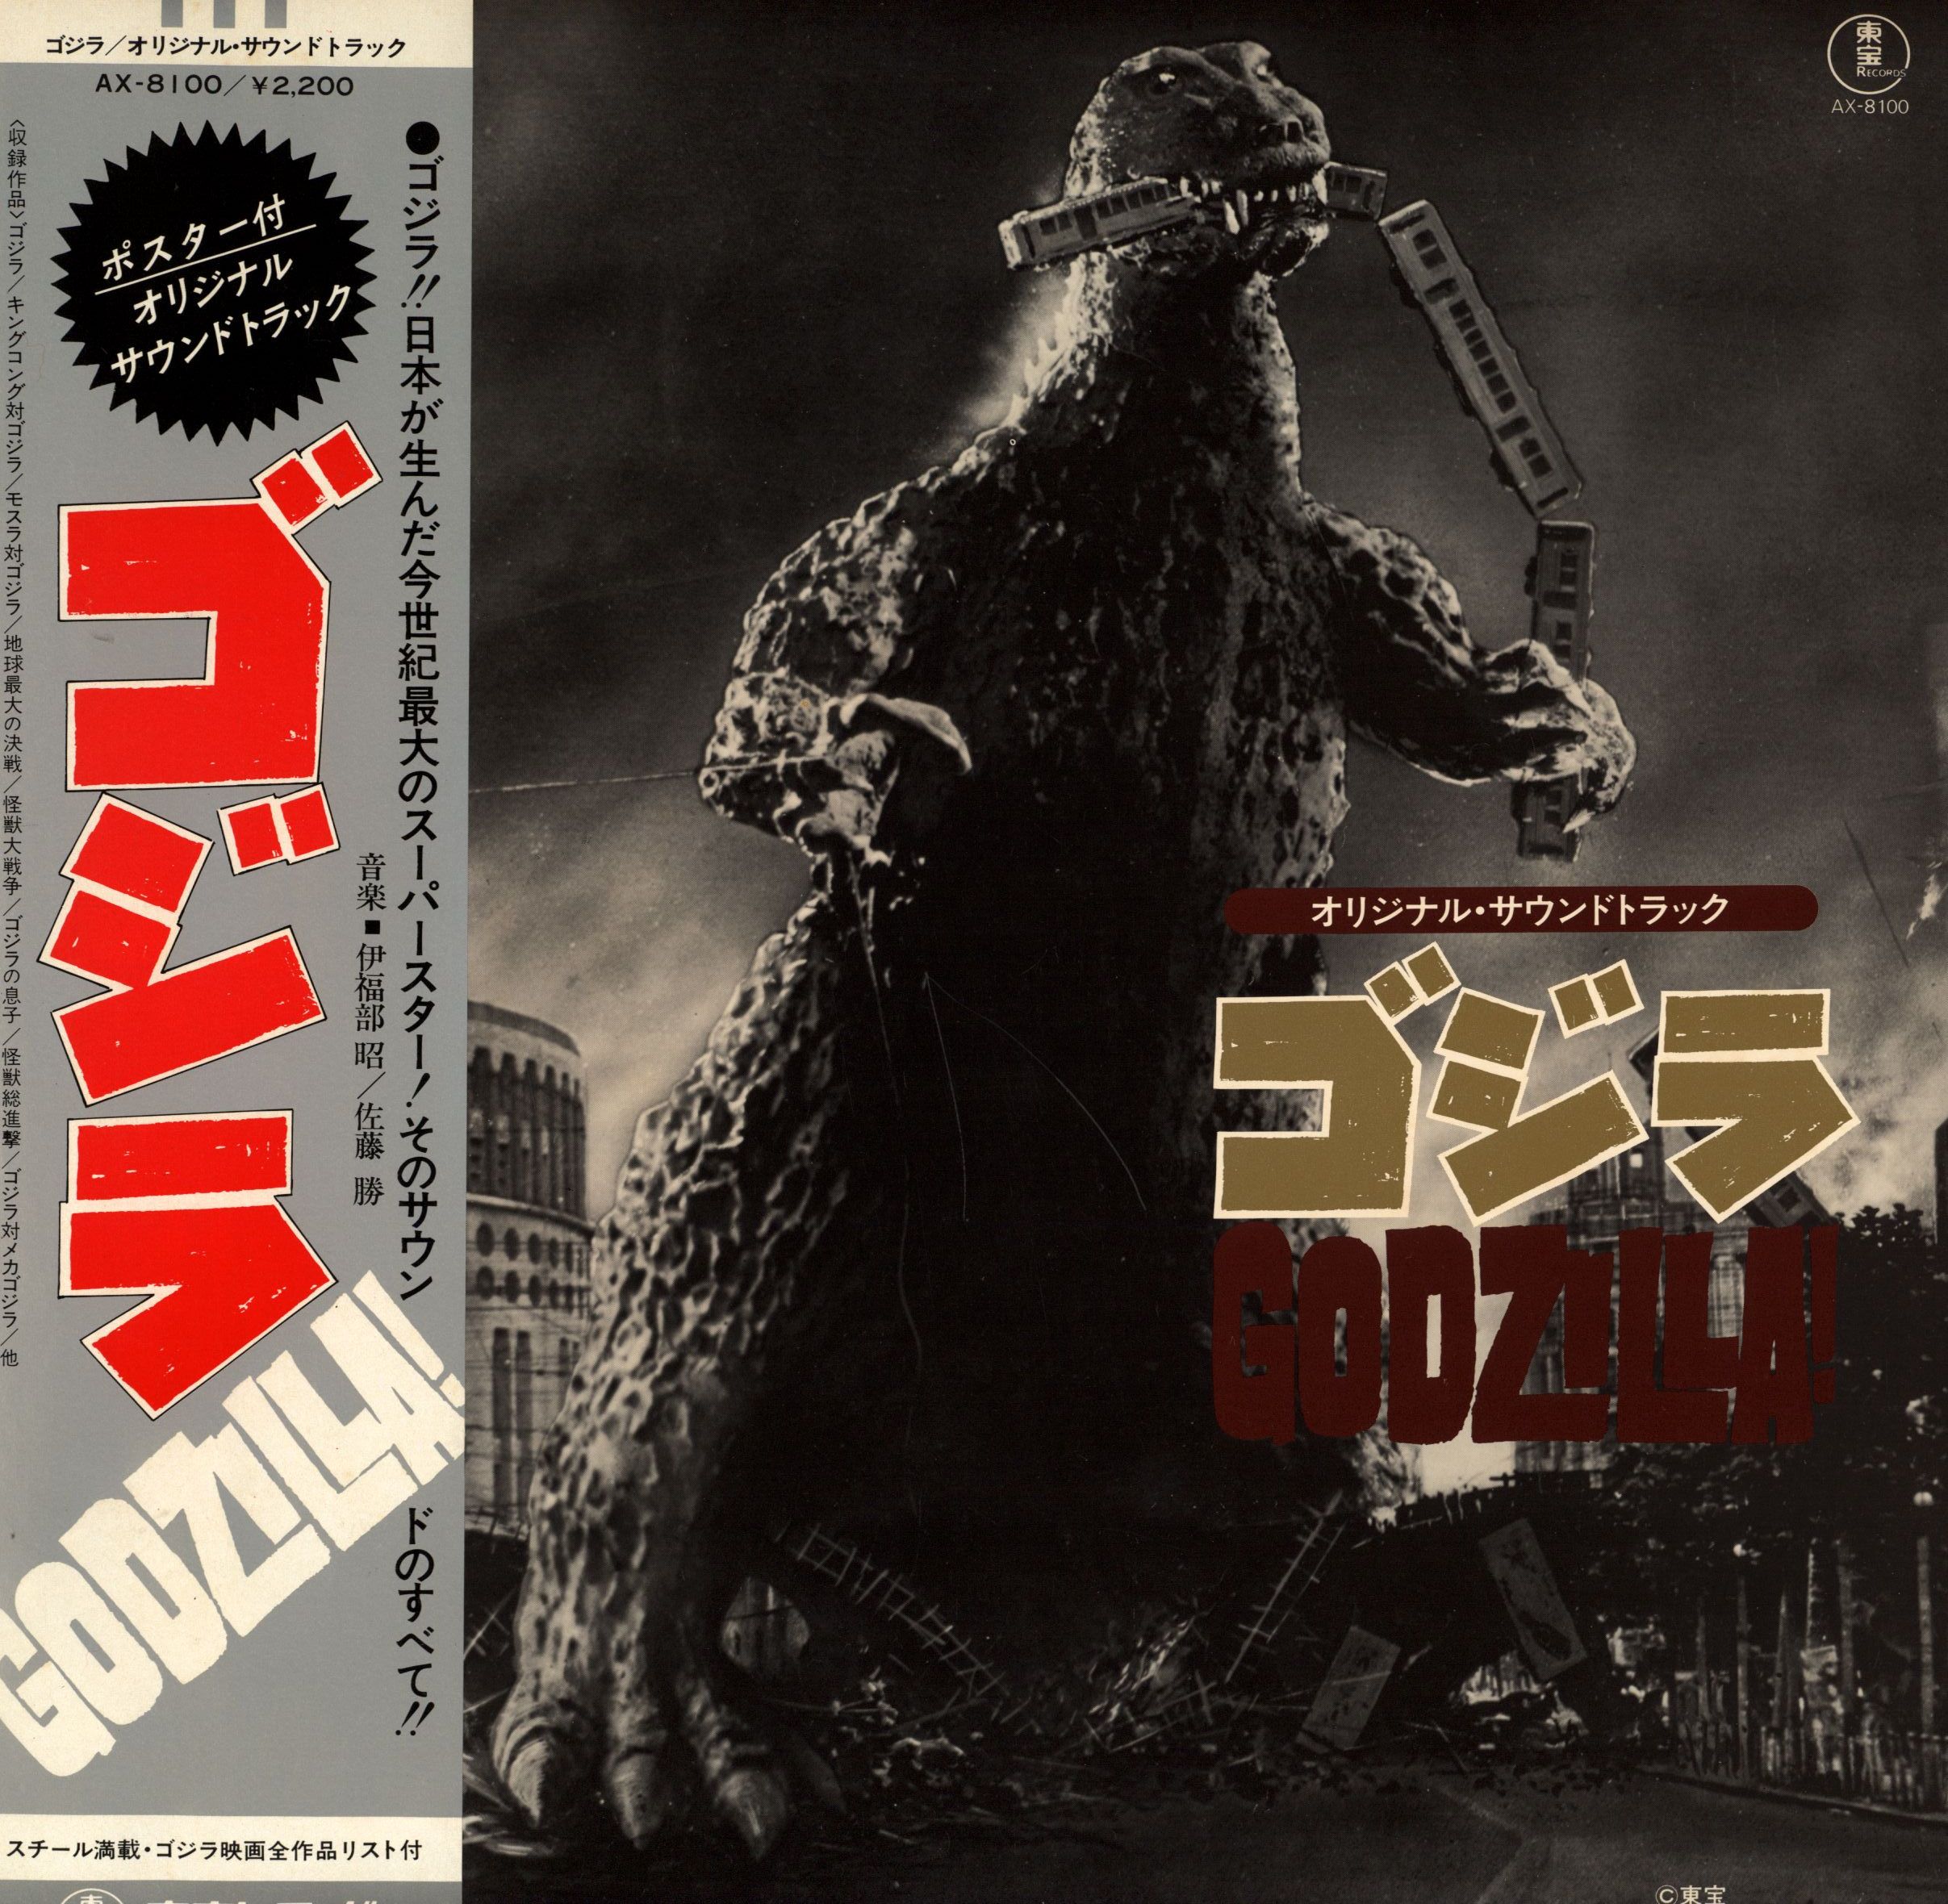 V/A CRACK ! GOZIRA RECORDS COMPLETE COLLECTION 1978 - 1979 LP 